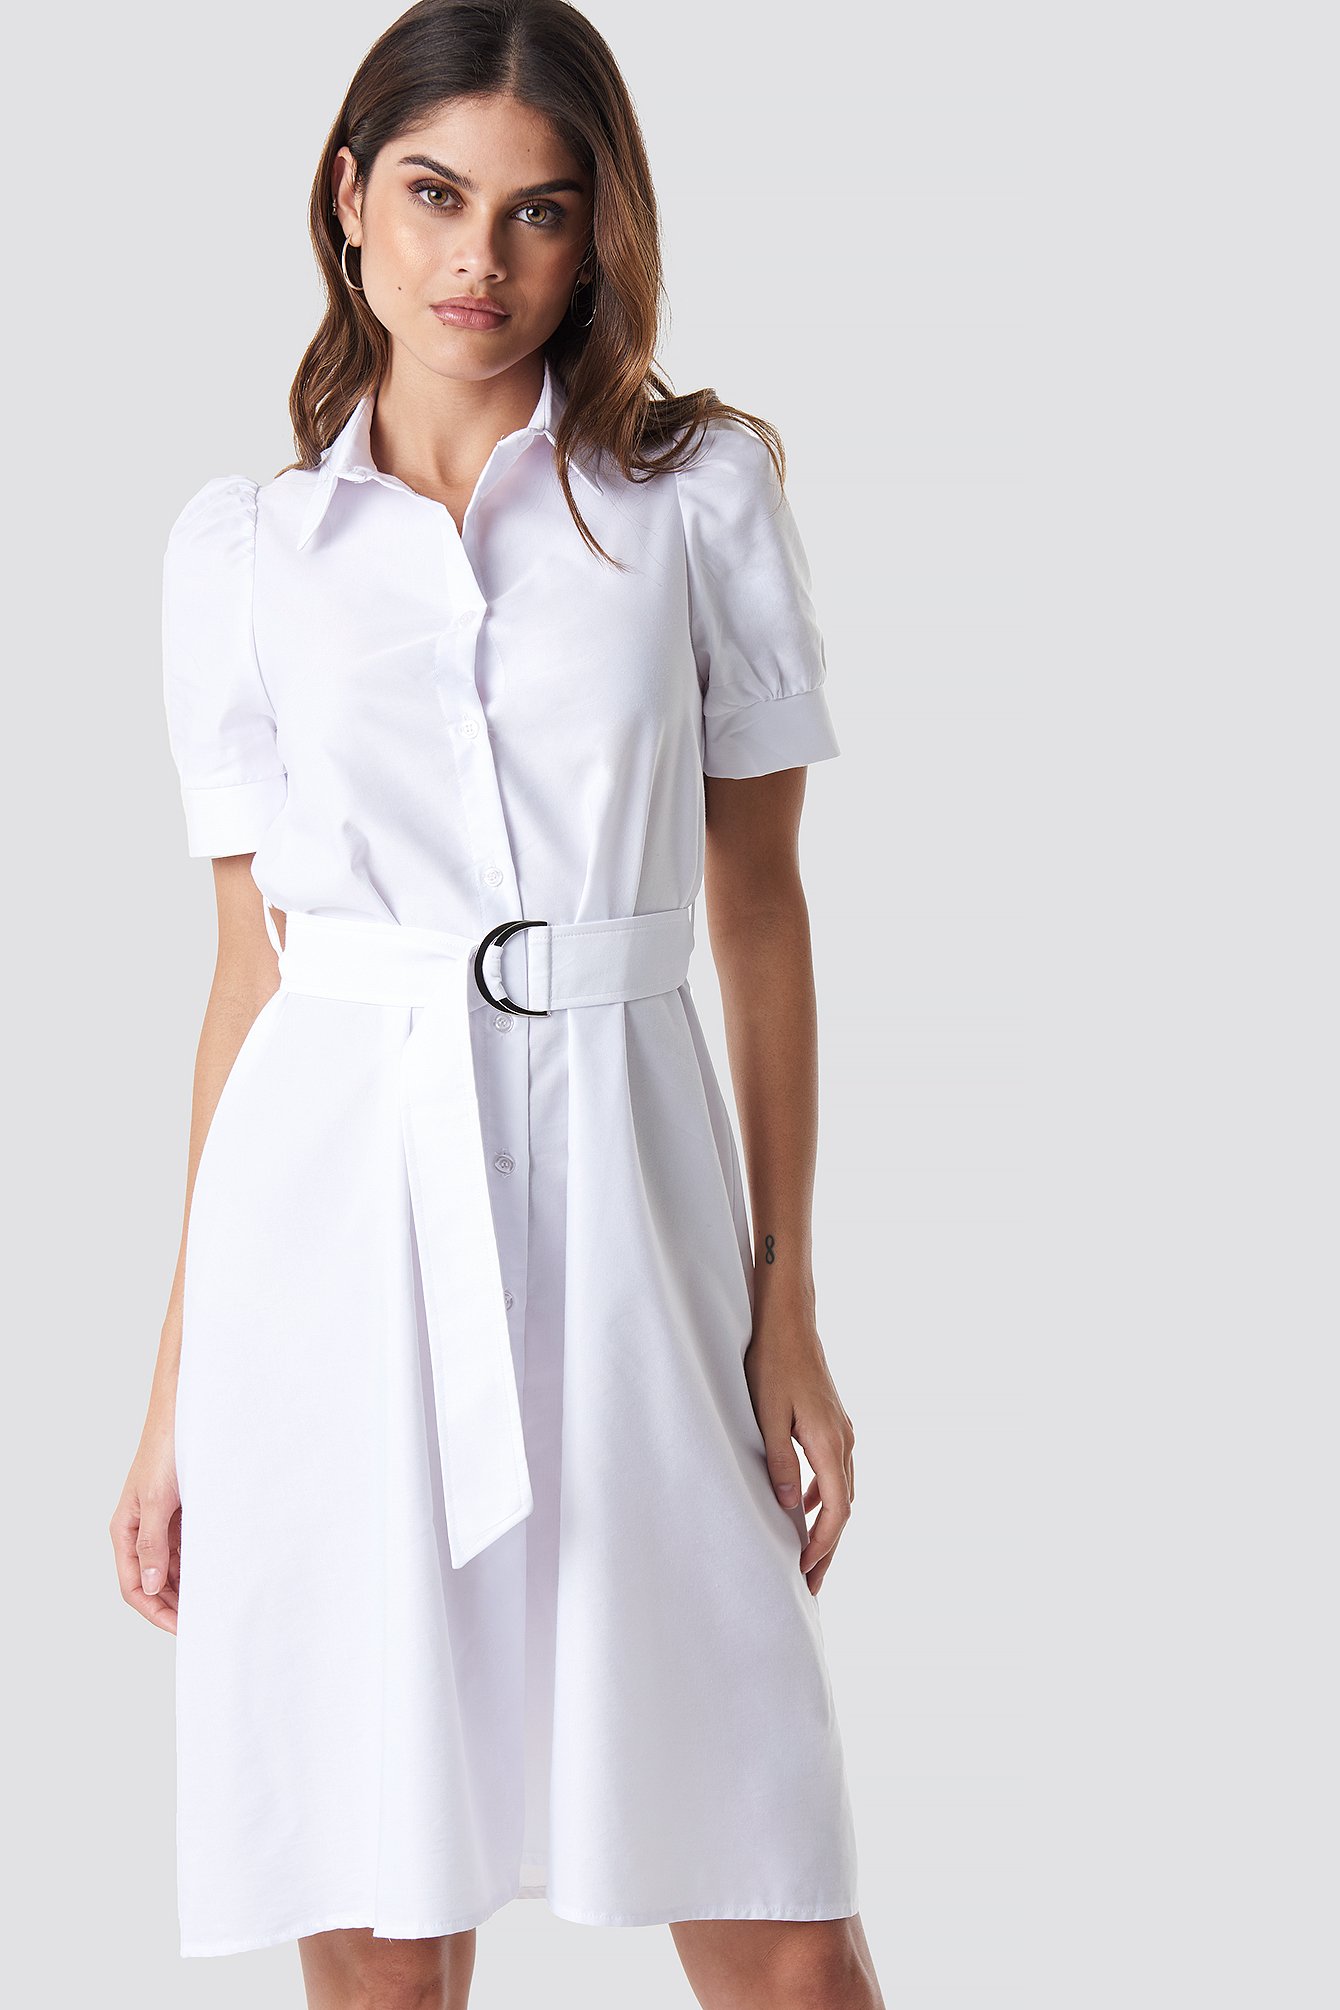 white belted shirt dress